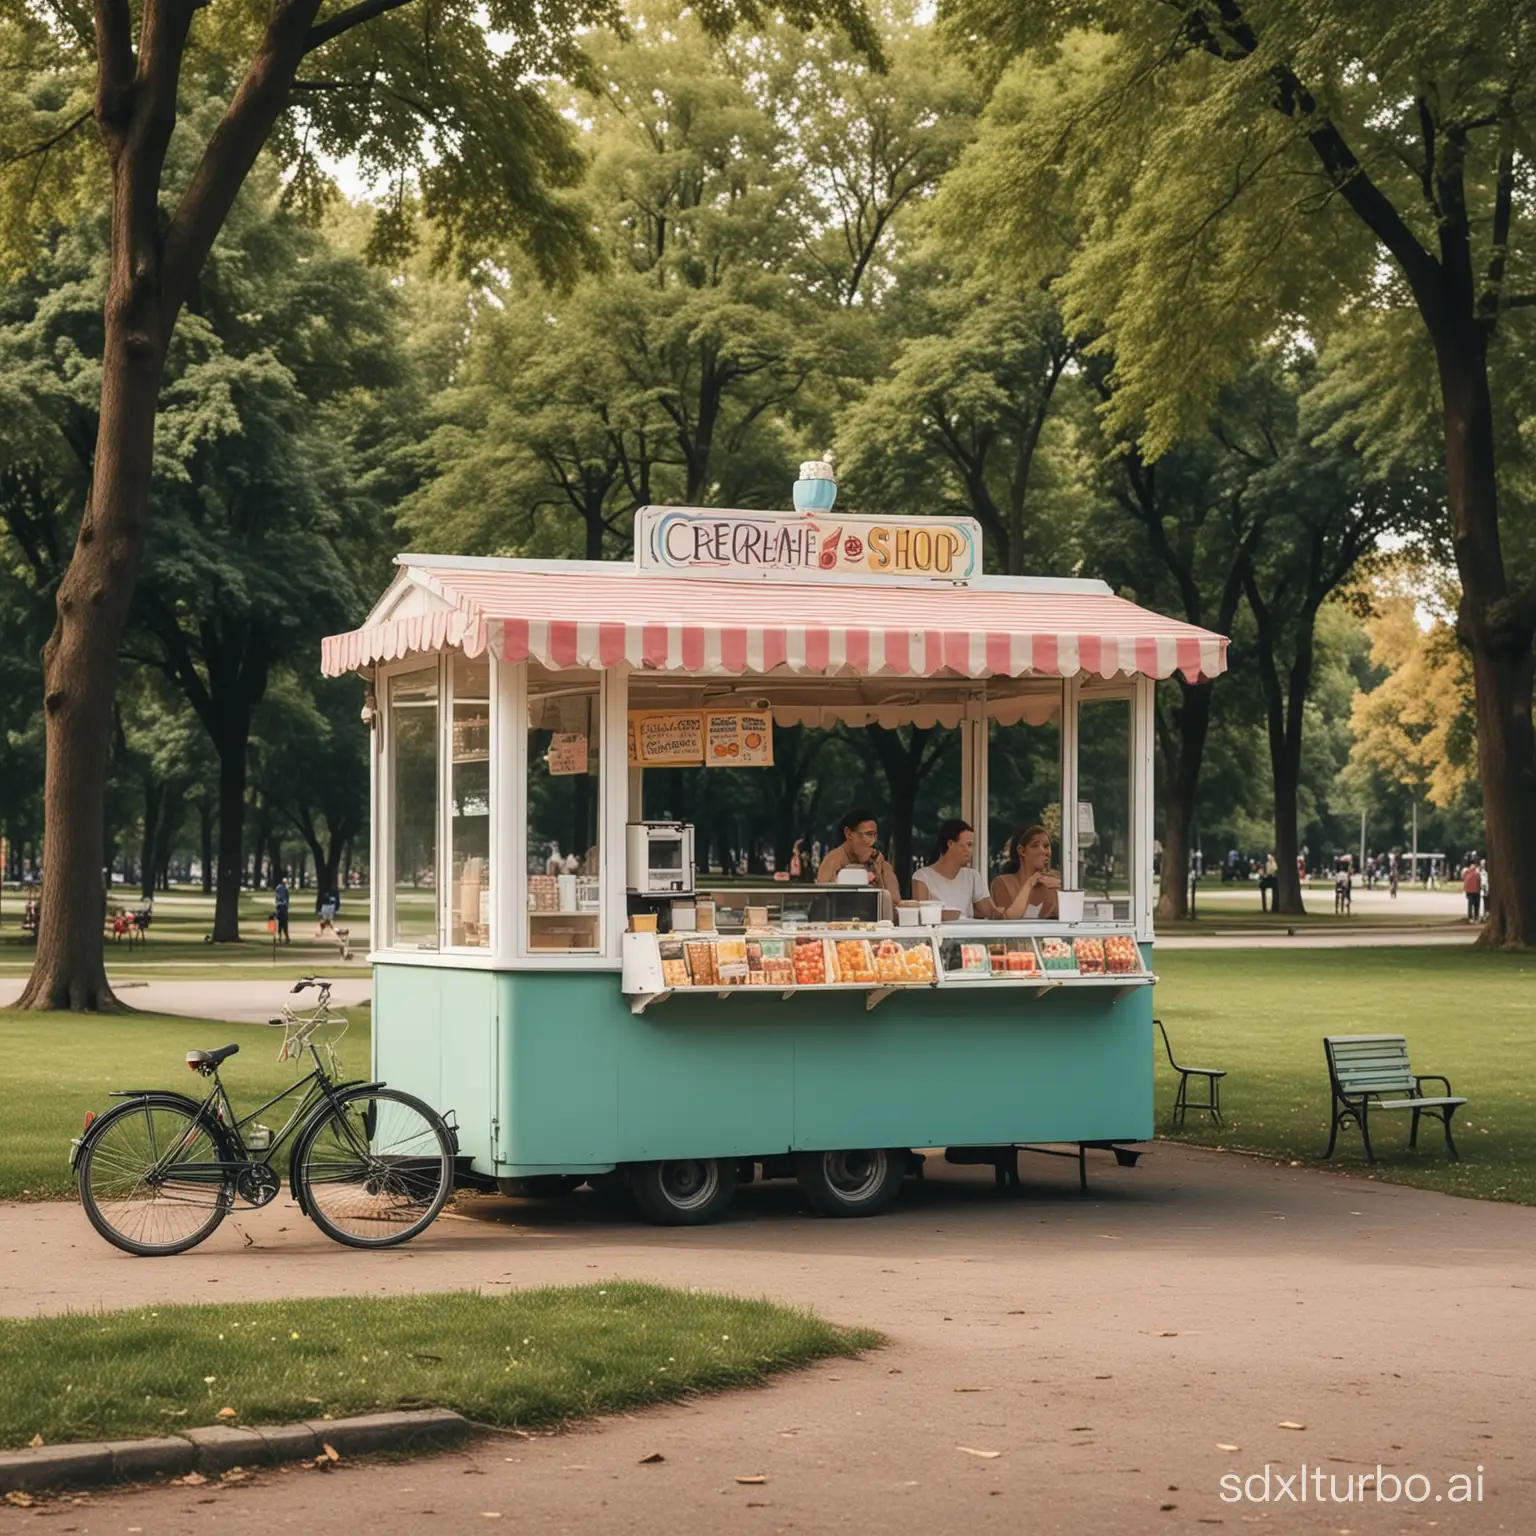 Colorful-Ice-Cream-Shop-Amidst-Lush-Park-Setting